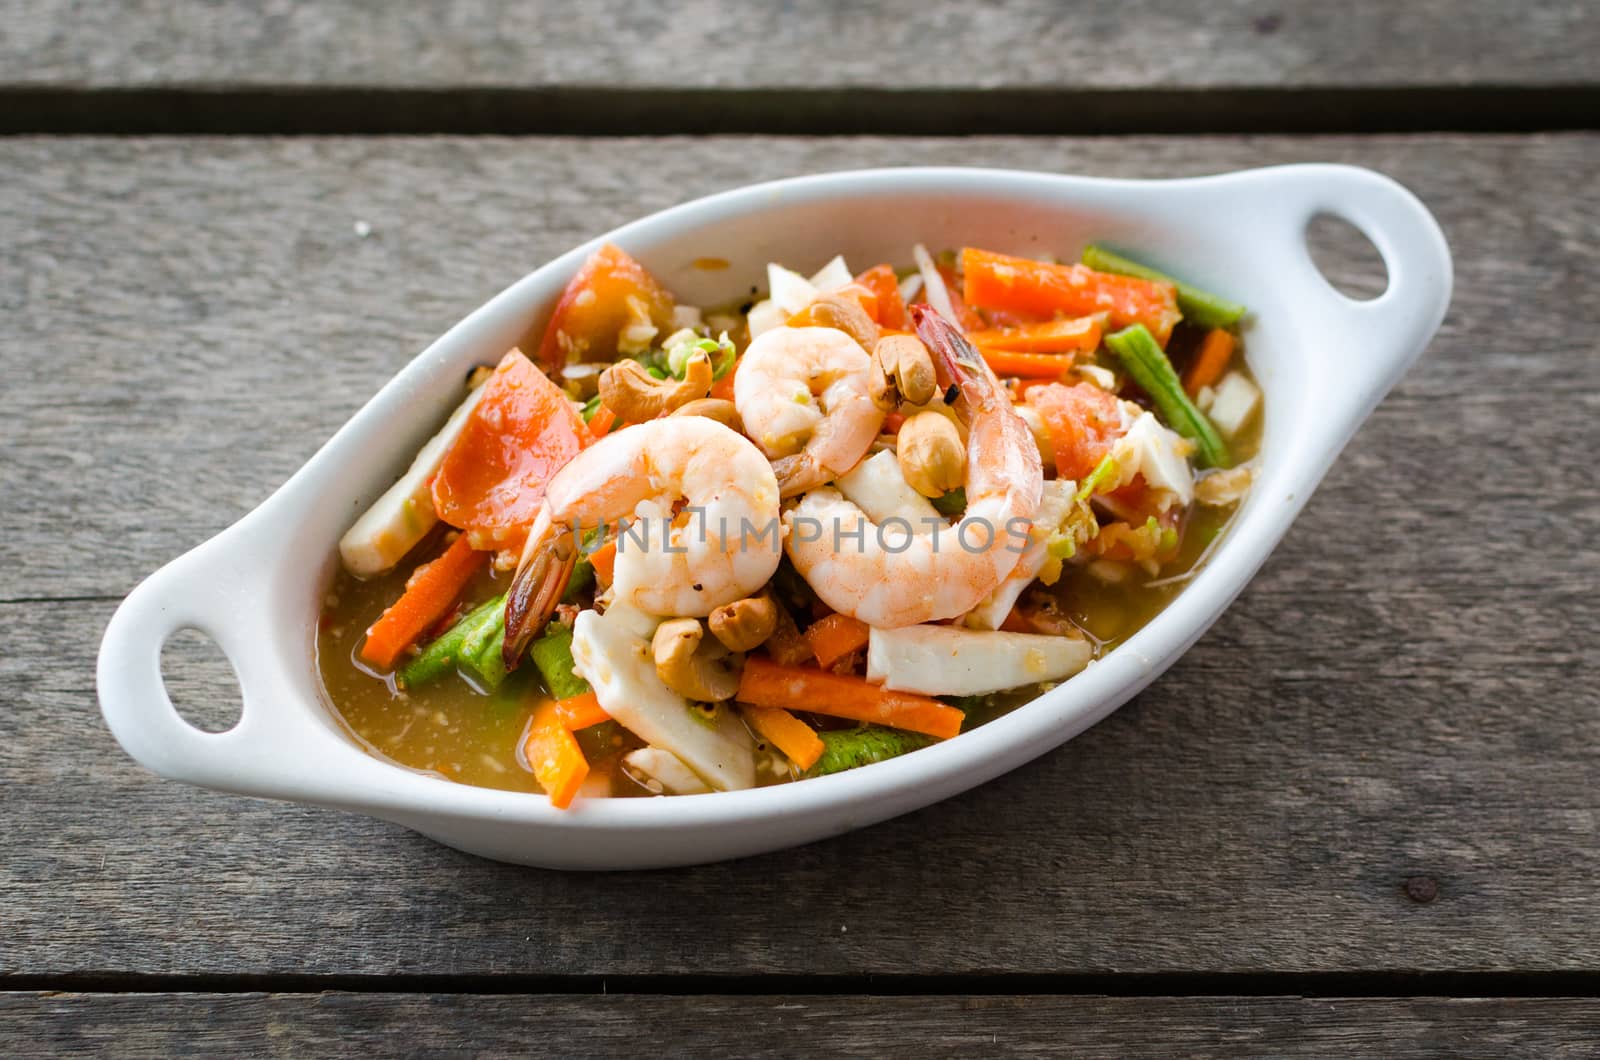 Shrimp salad thai cuisine spicy delicious by nop16